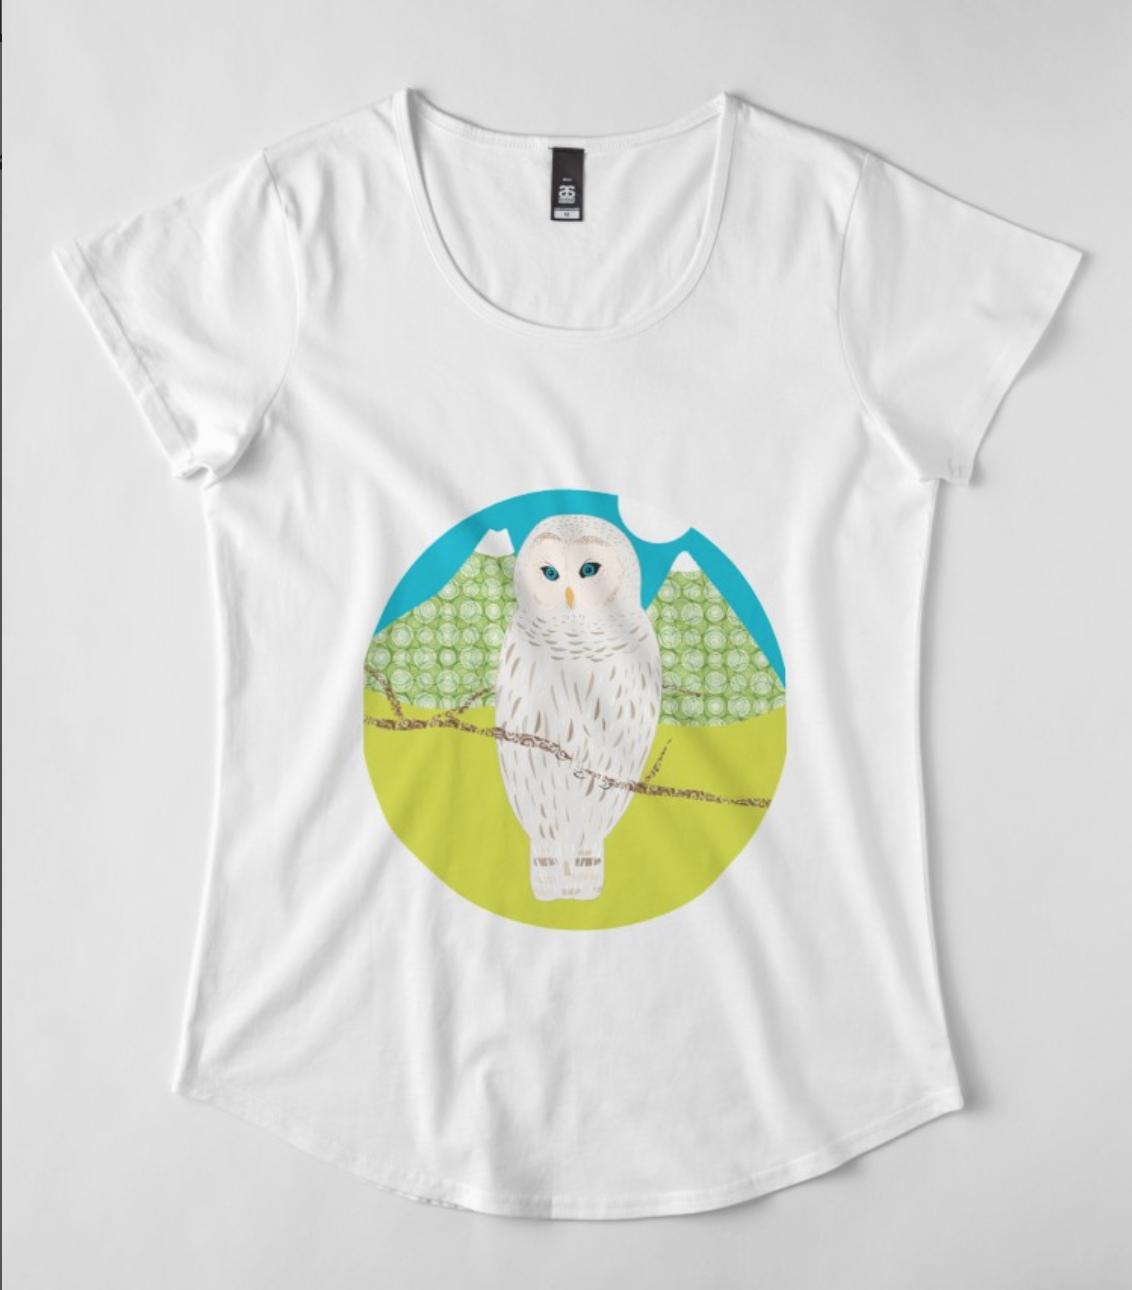 Tshirt "Blanche, la chouette" by Rosa Lee Design